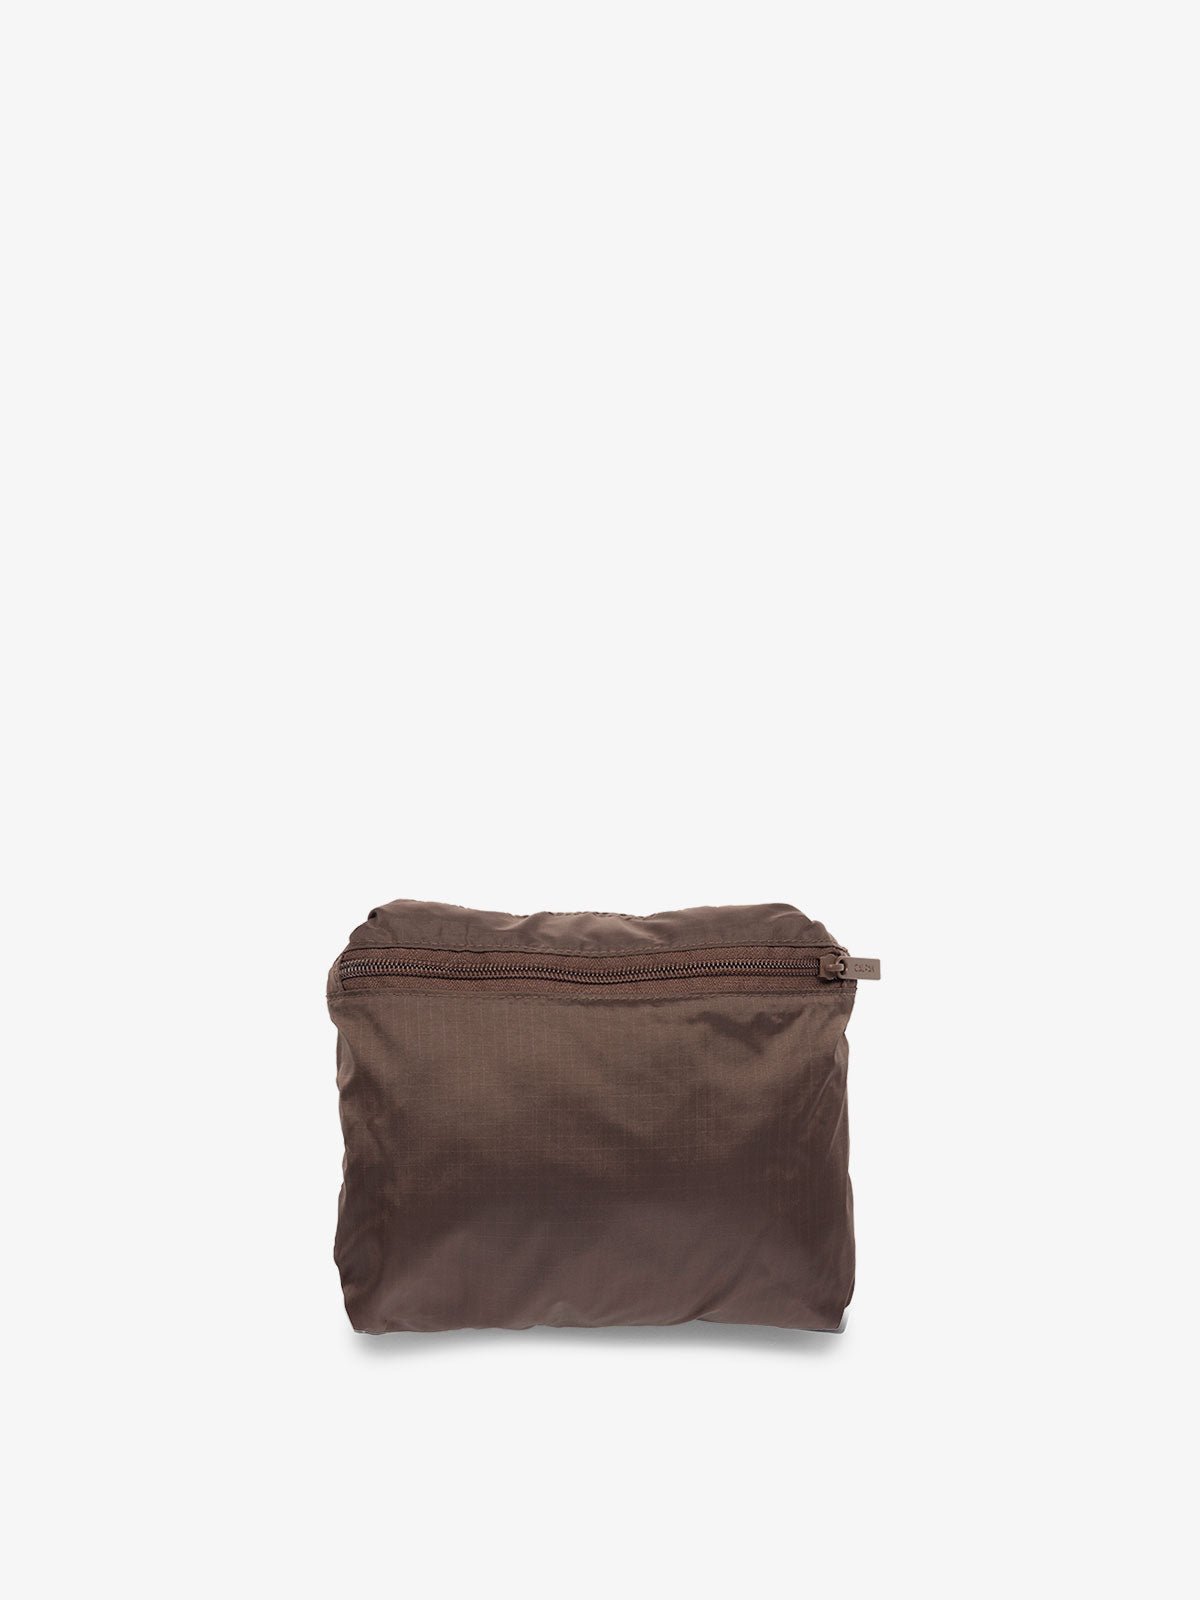 CALPAK Compakt foldable duffle bag for travel in brown